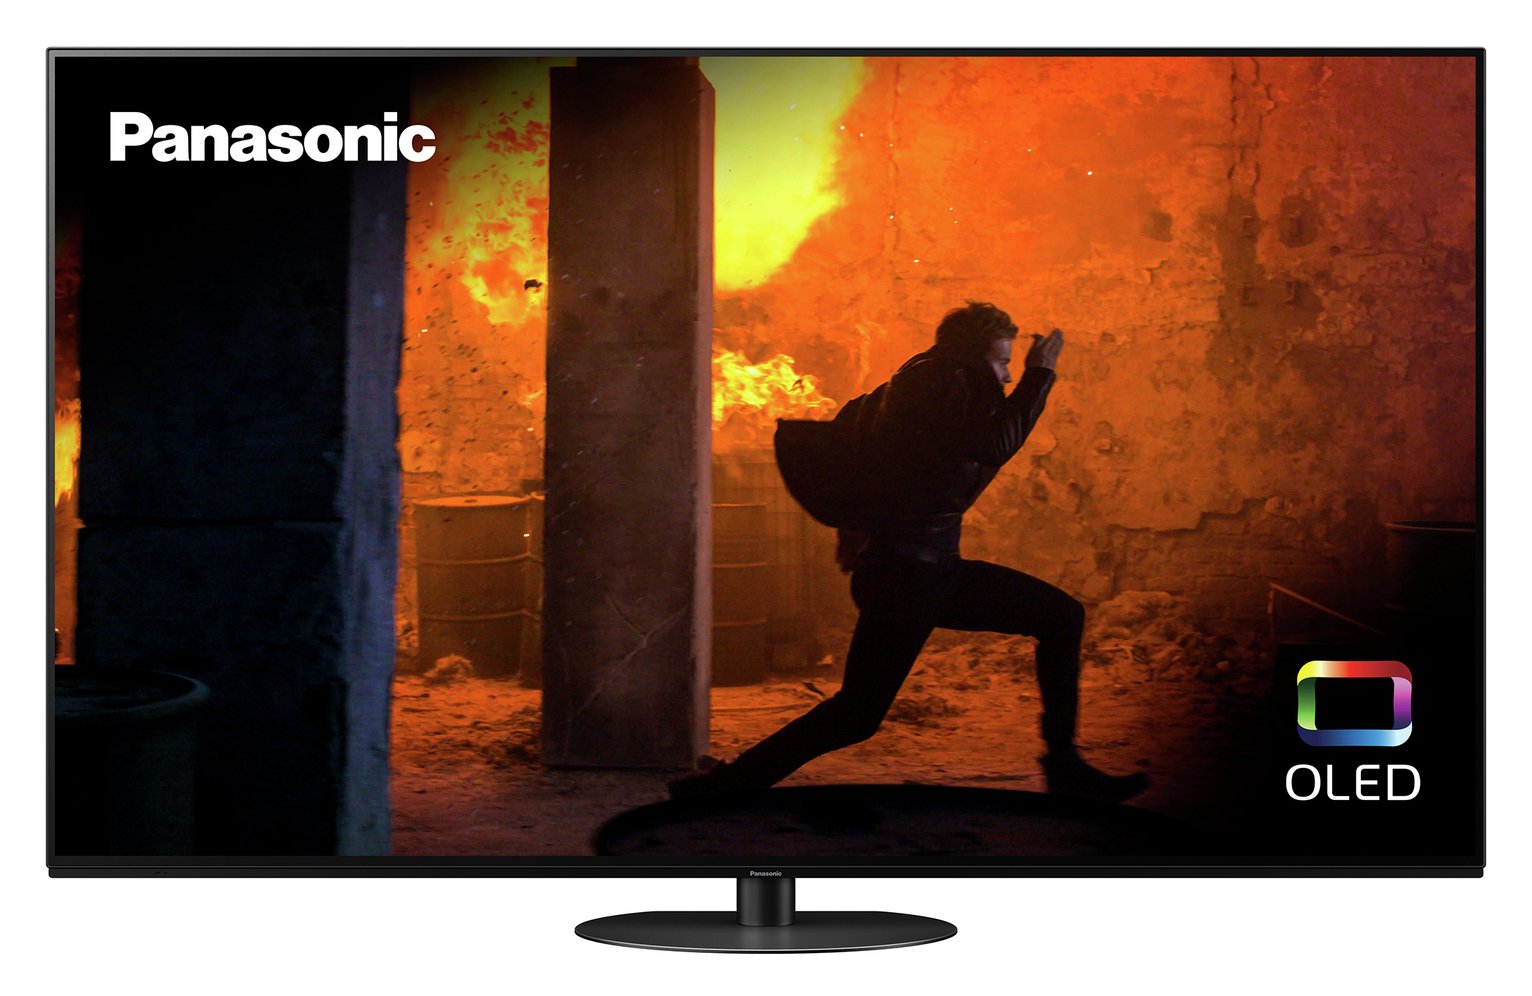 Panasonic 65 Inch TX-65HZ980B Smart 4K Ultra HD OLED TV Review